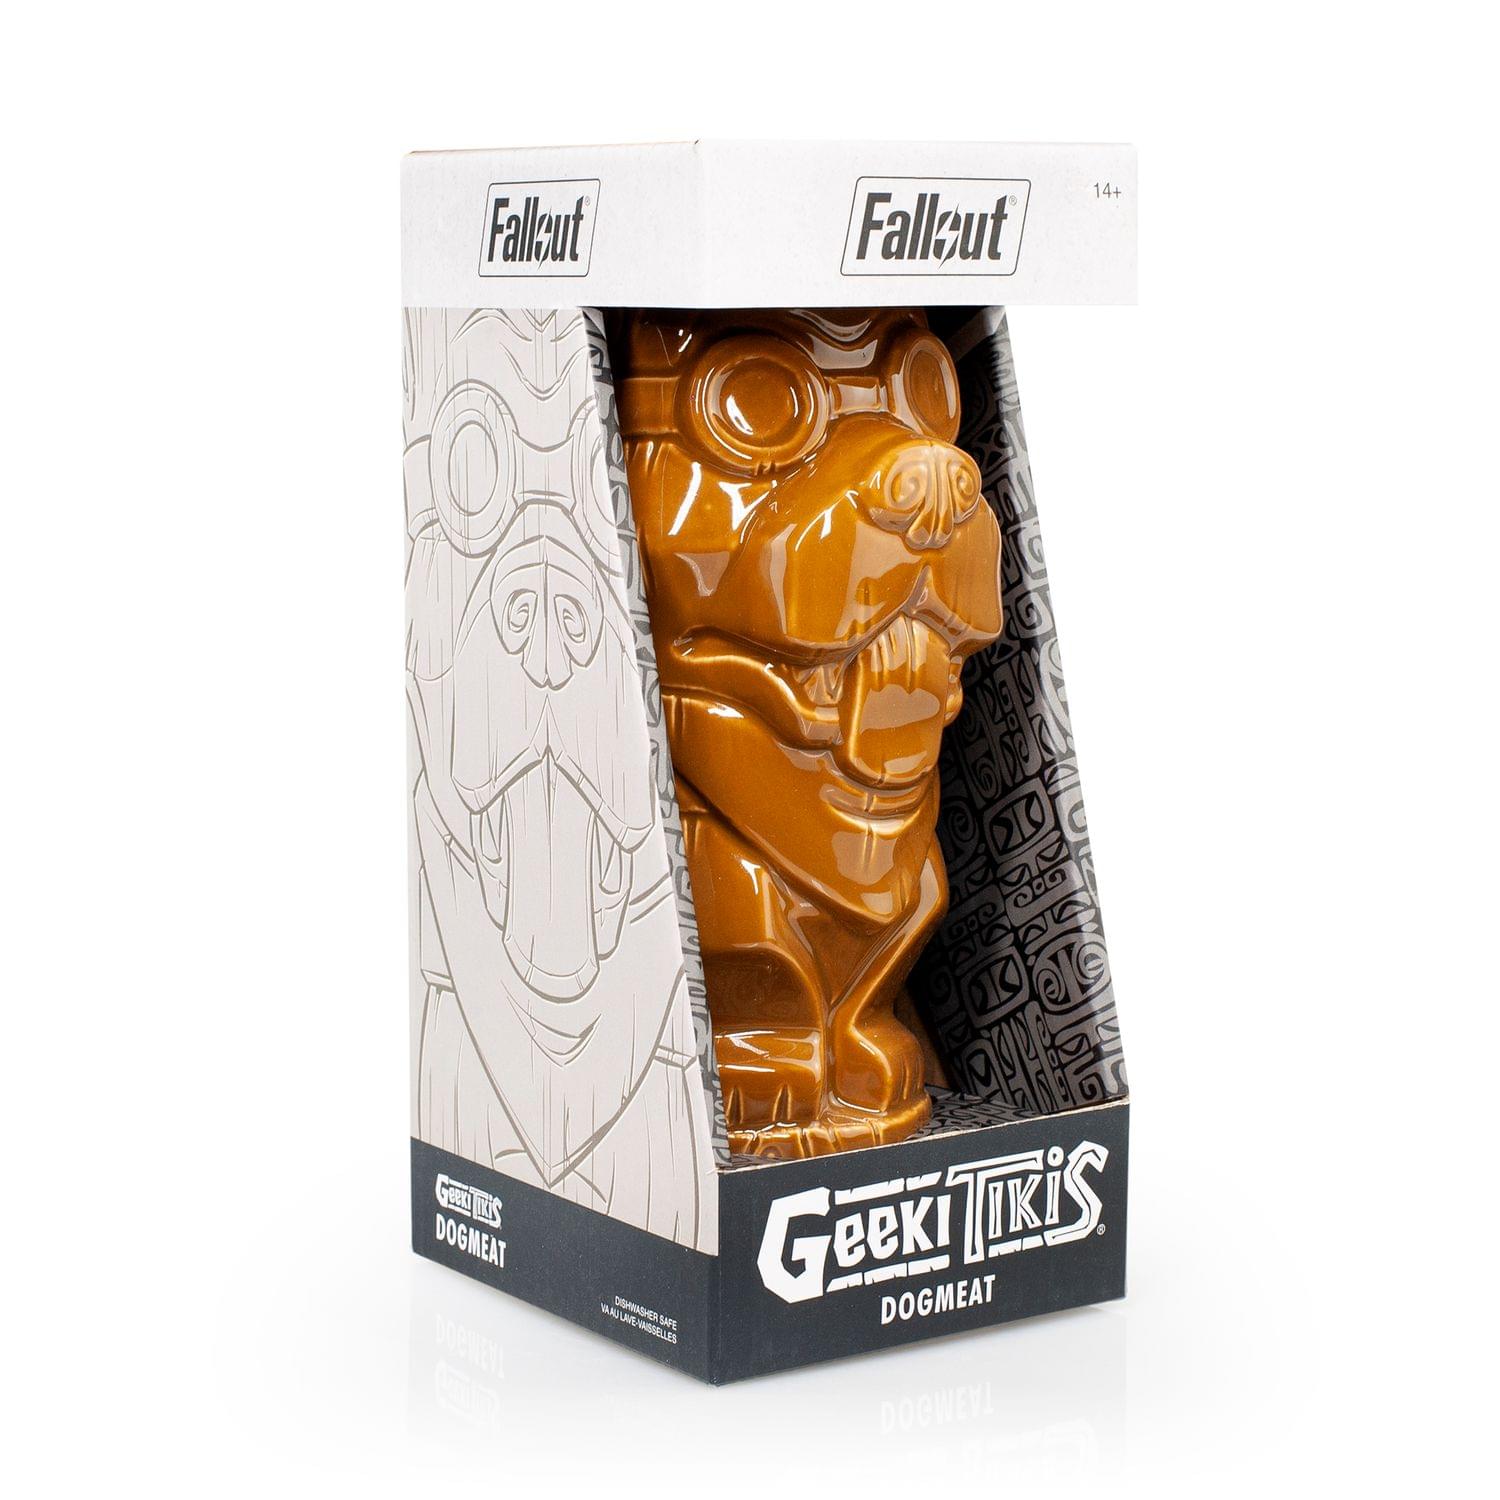 Geeki Tikis Fallout Dogmeat Mug | Crafted Ceramic | Holds 14 Ounces